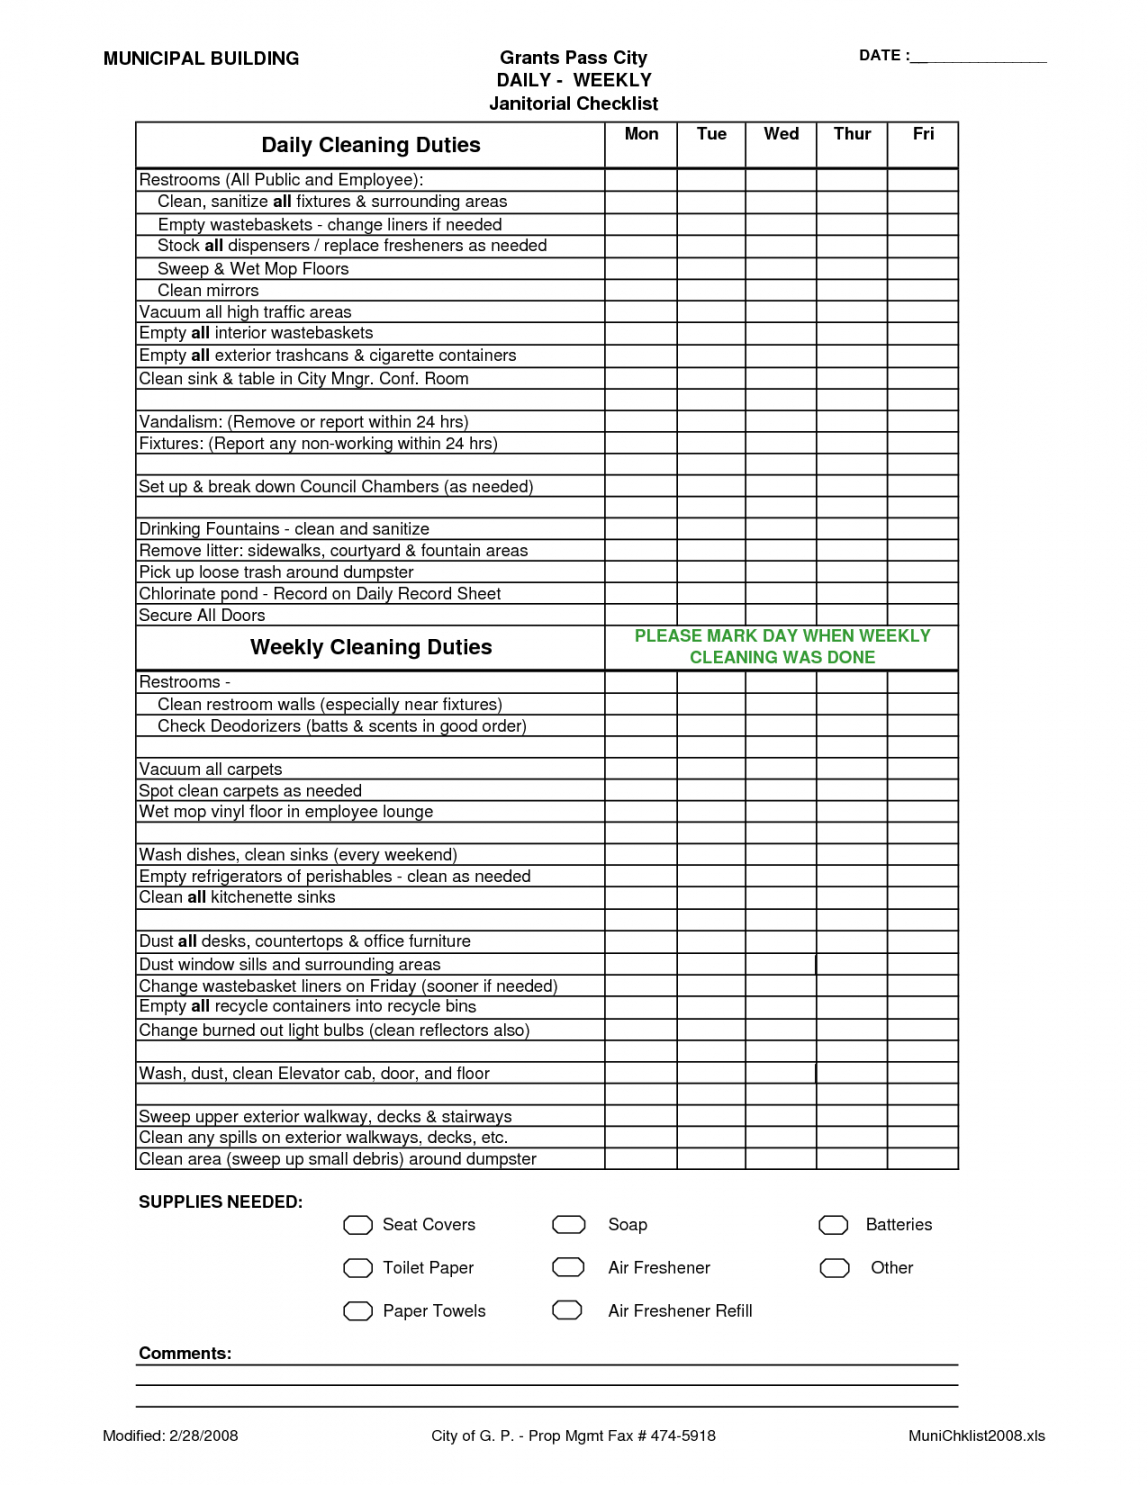 free front desk checklist template  thorcicerosco front desk checklist template doc